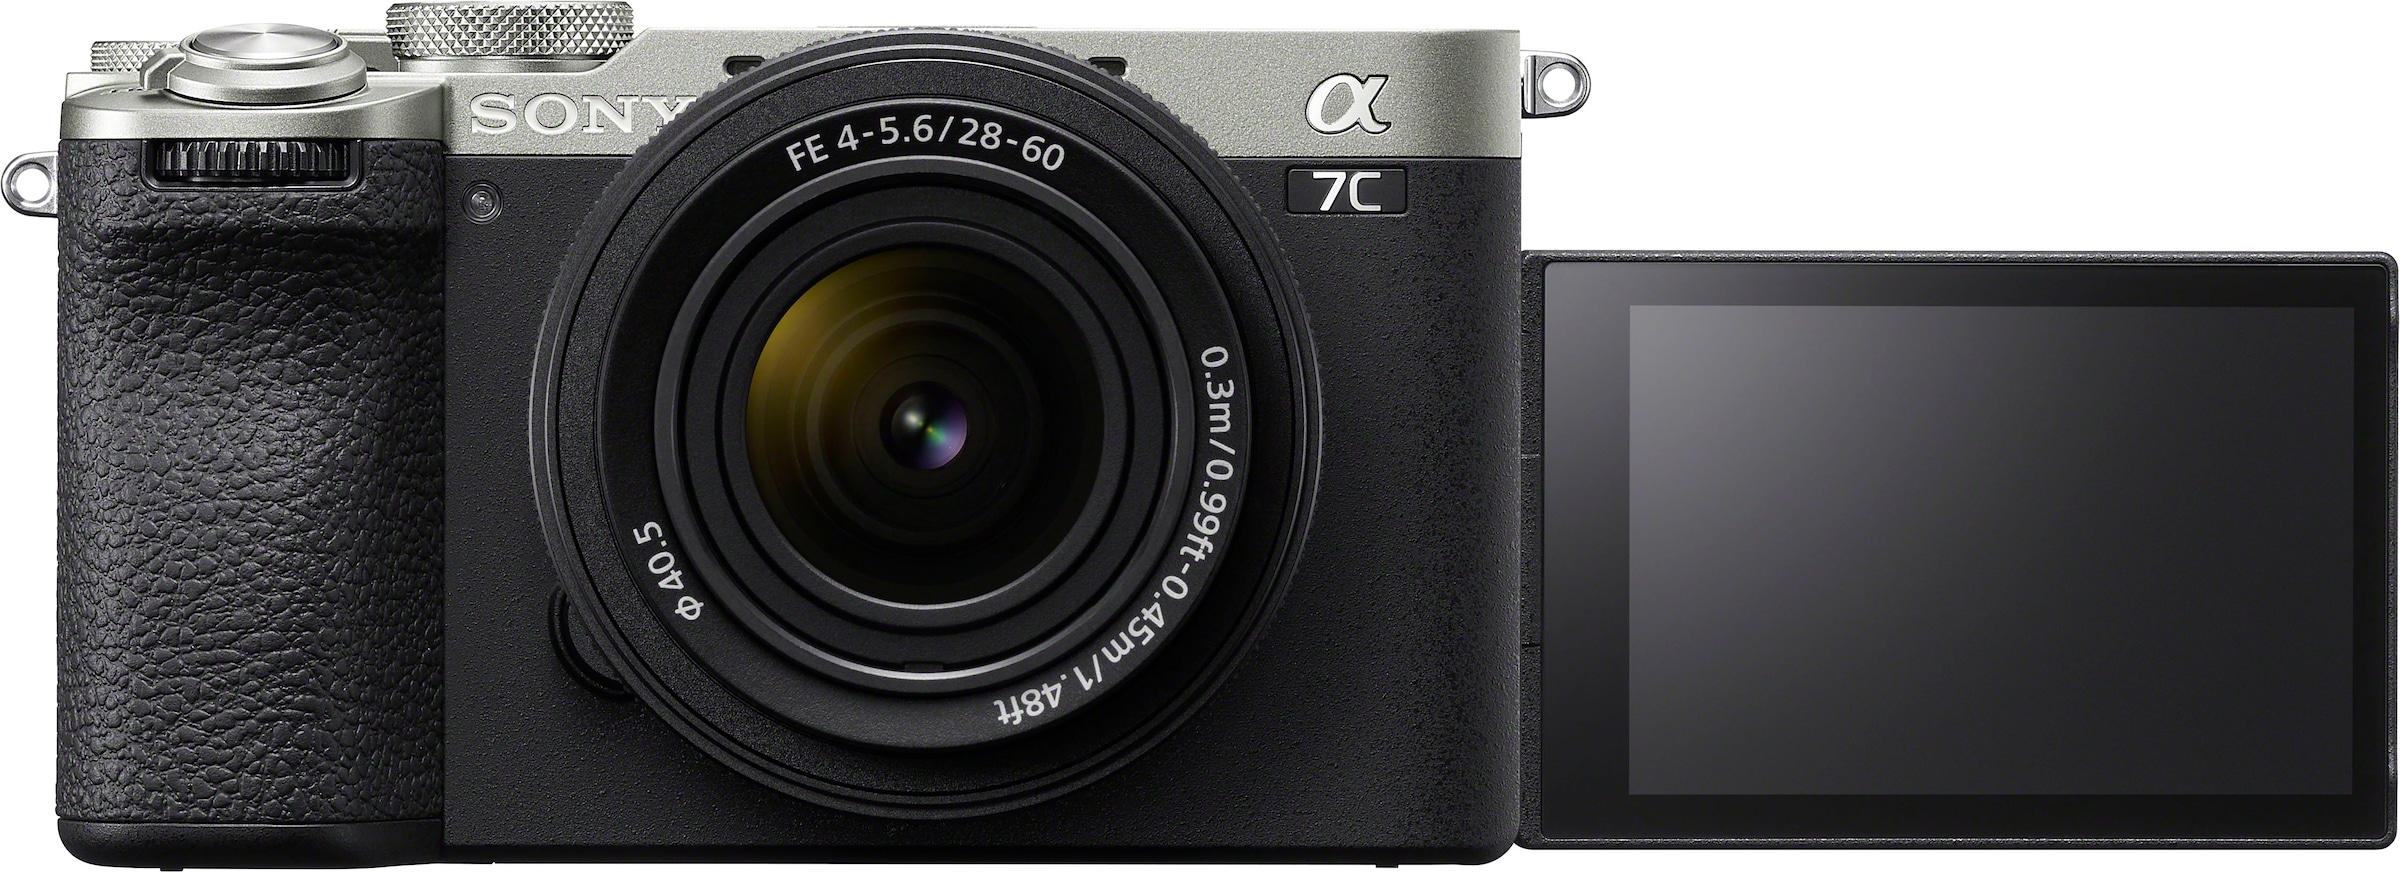 f4-5.6, MP, 33 Systemkamera FE Sony II«, online 2,1 28-60mm fachx »Alpha Bluetooth-WLAN-NFC 7C kaufen opt. Zoom,